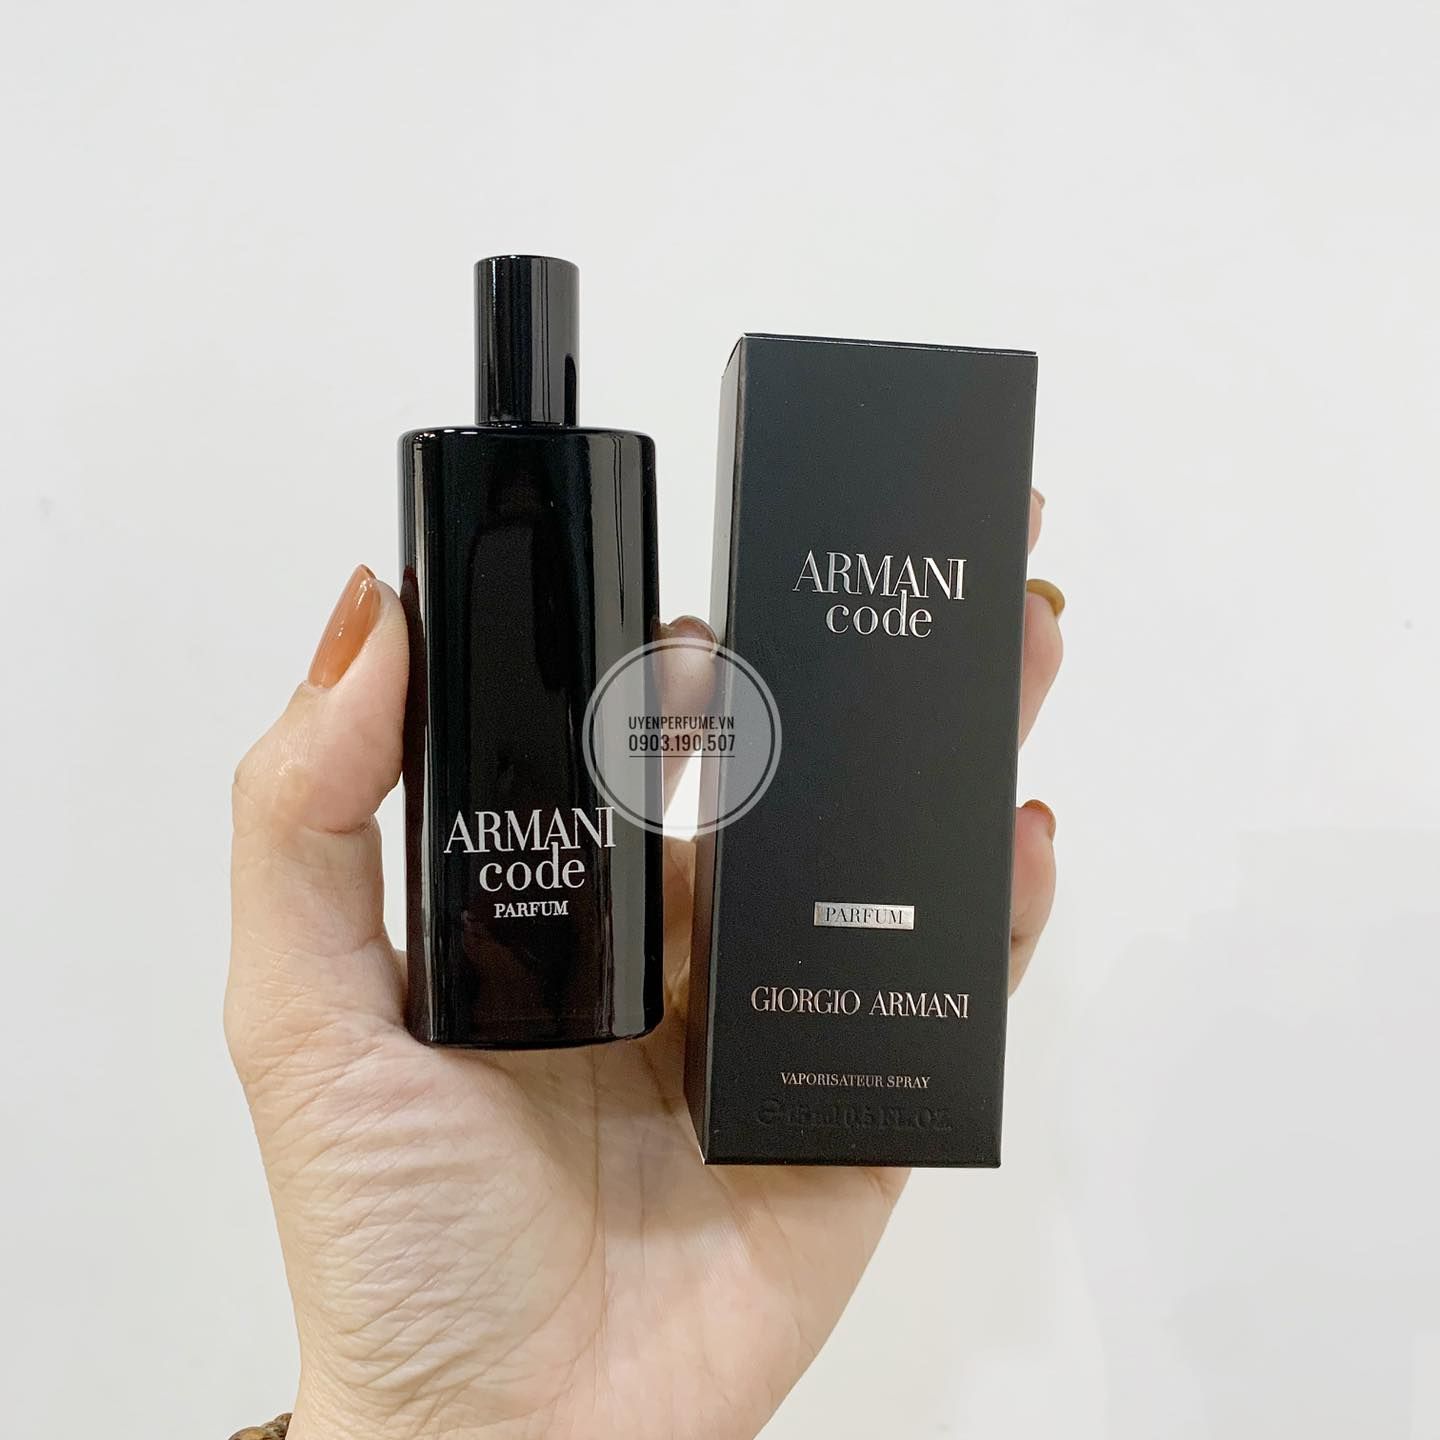  Armani Code Parfum 15ml 